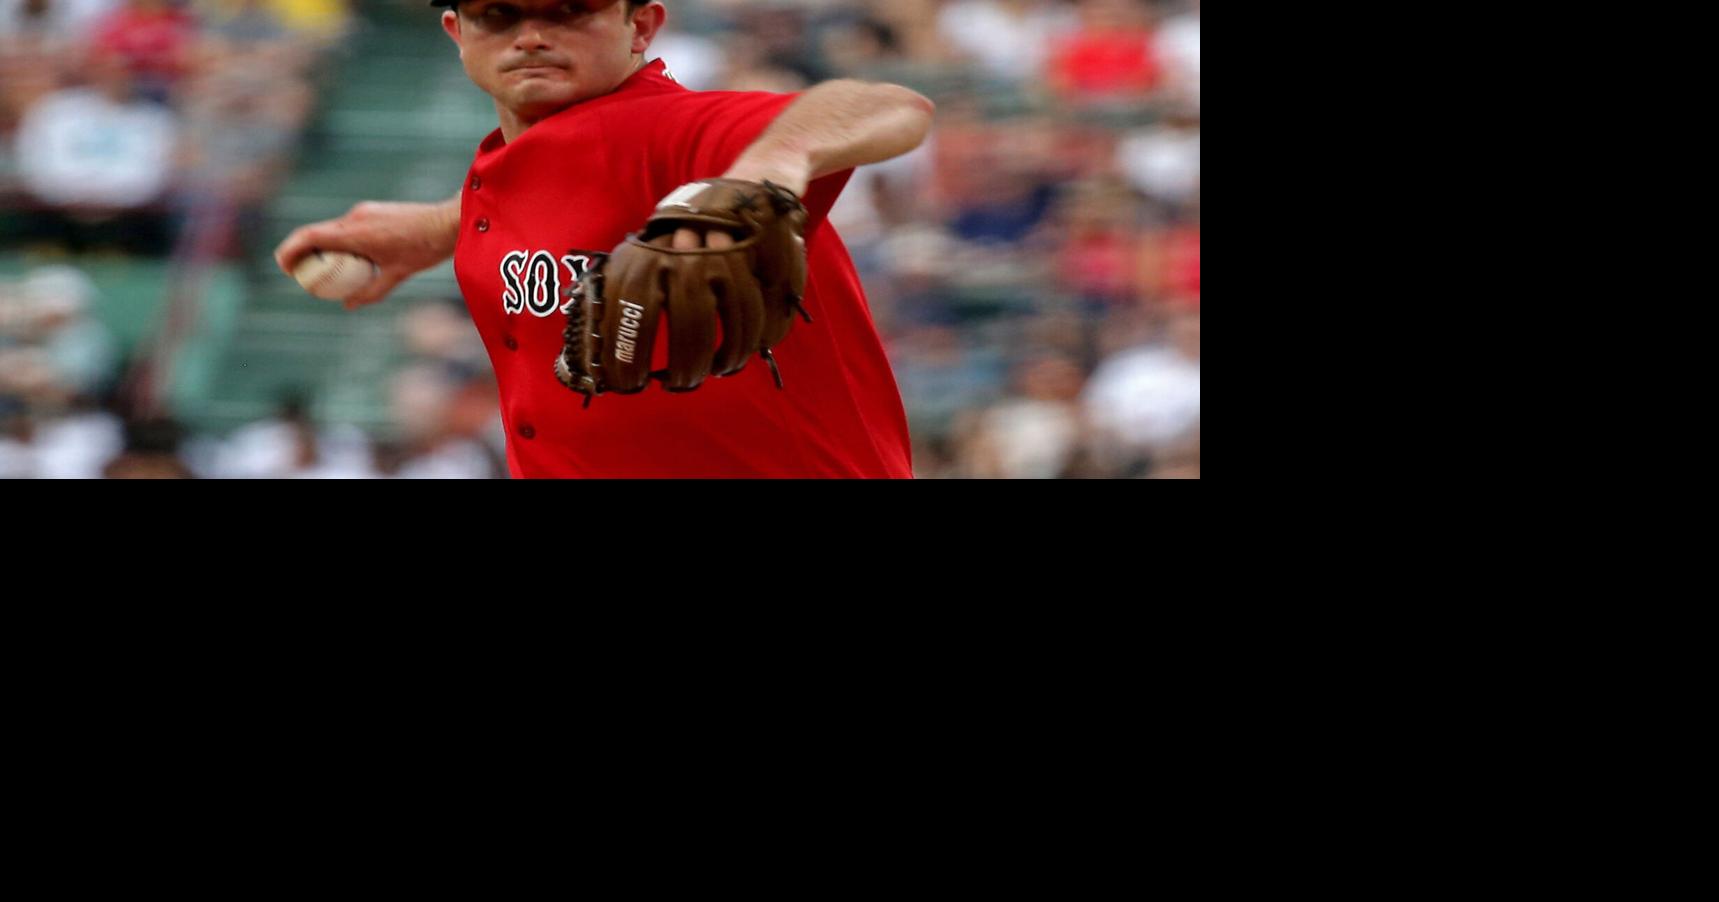 Lost seasons by Tanner Houck, Garrett Whitlock helped doom Red Sox, National